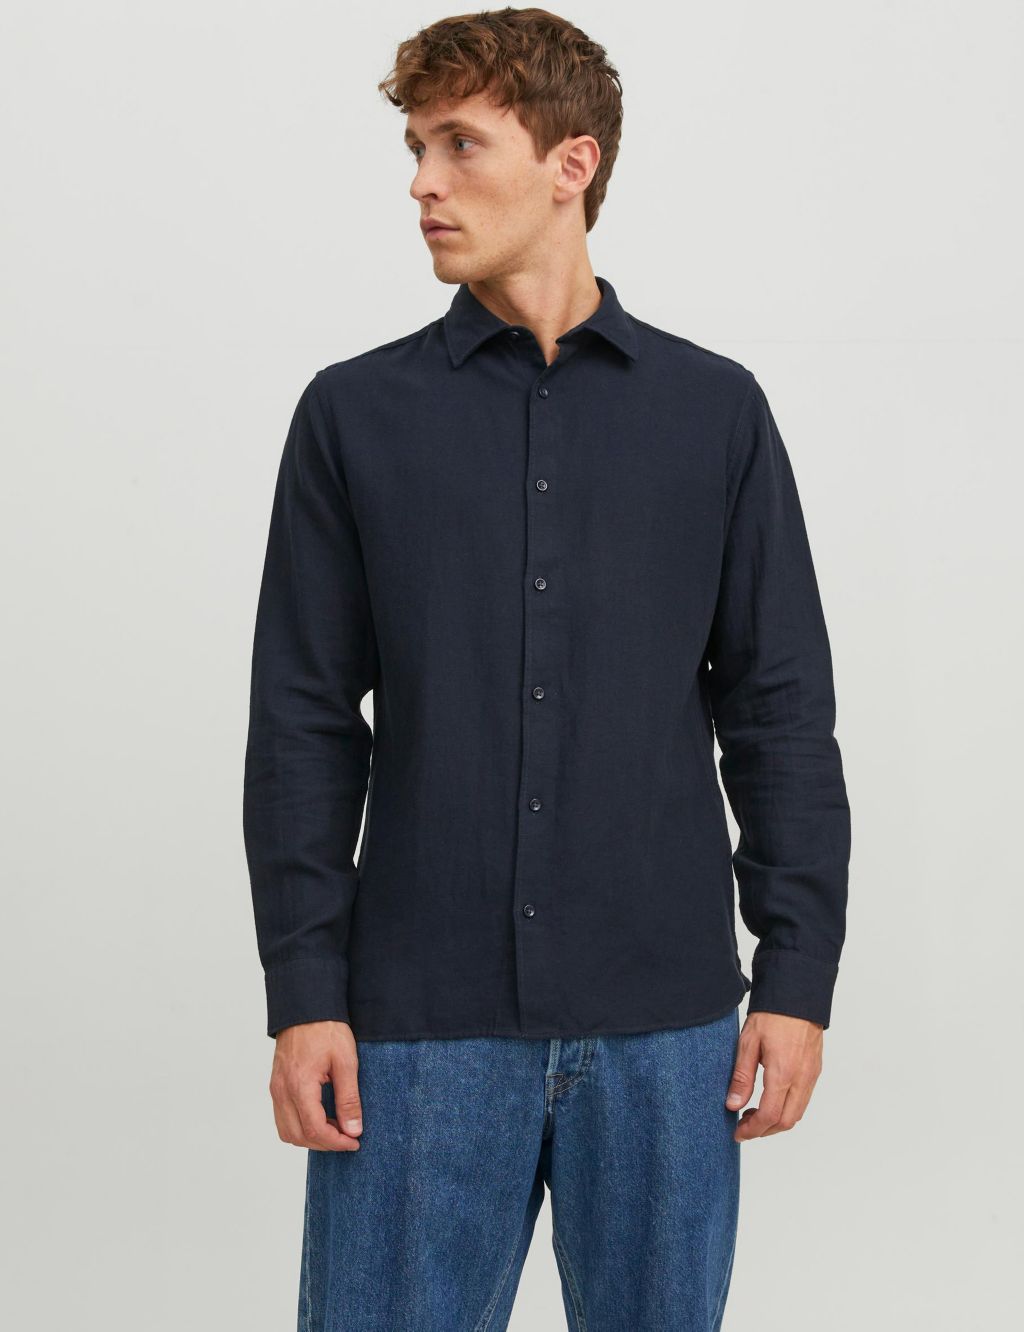 Slim Fit Cotton Blend Oxford Shirt image 1